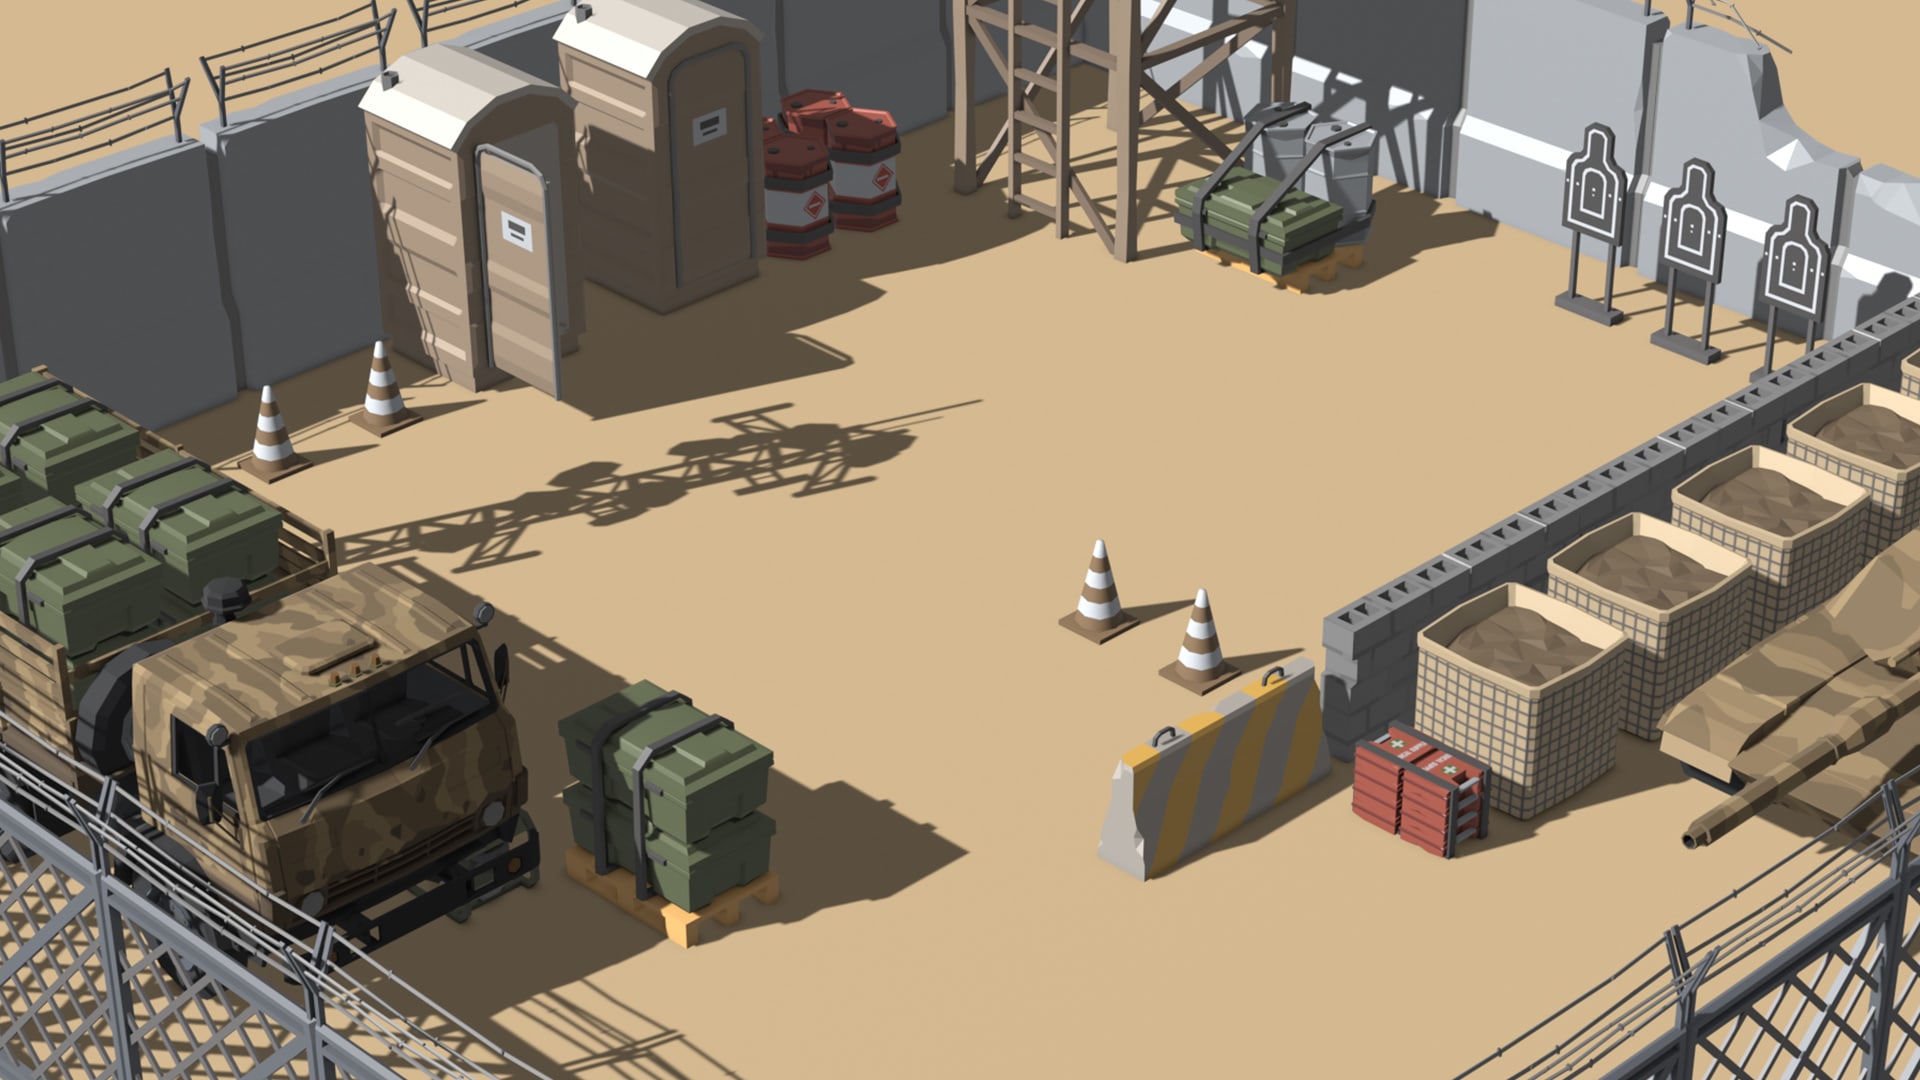 Forklift Extreme: Military Storage 1